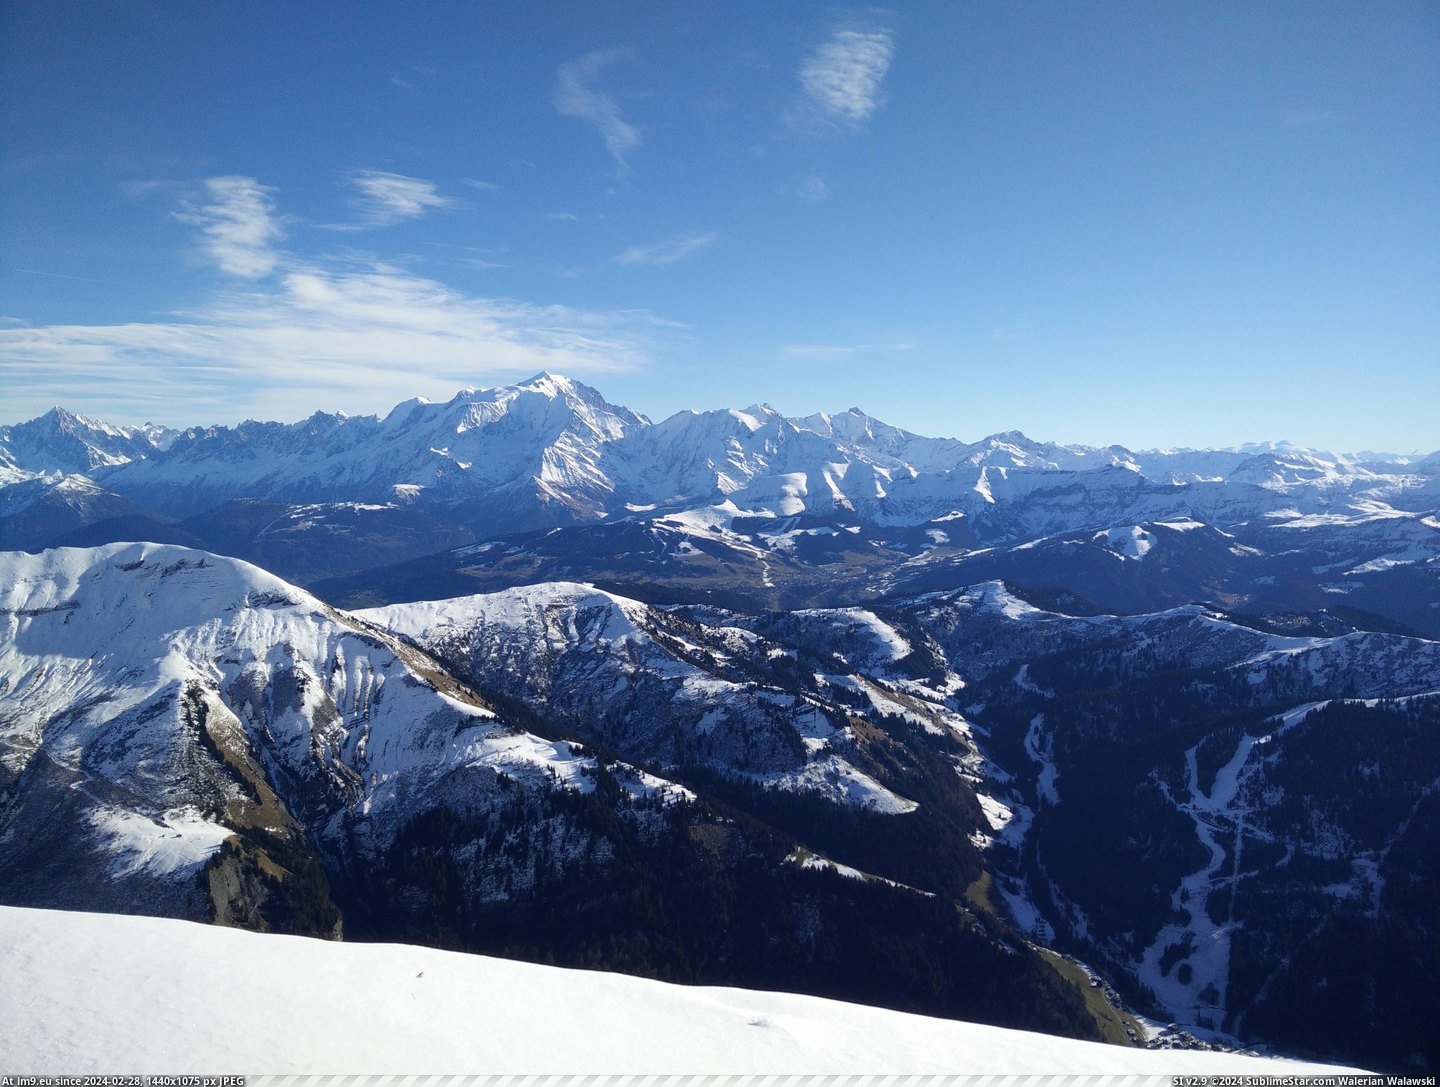 #Snow #Mountain #Peak #Blanc #Ski #Mont #Range #Resort #Usual [Earthporn] View of Mont Blanc mountain range (with less snow than usual) from La Balme peak (2,186m) at La Clusaz ski resort, F Pic. (Image of album My r/EARTHPORN favs))